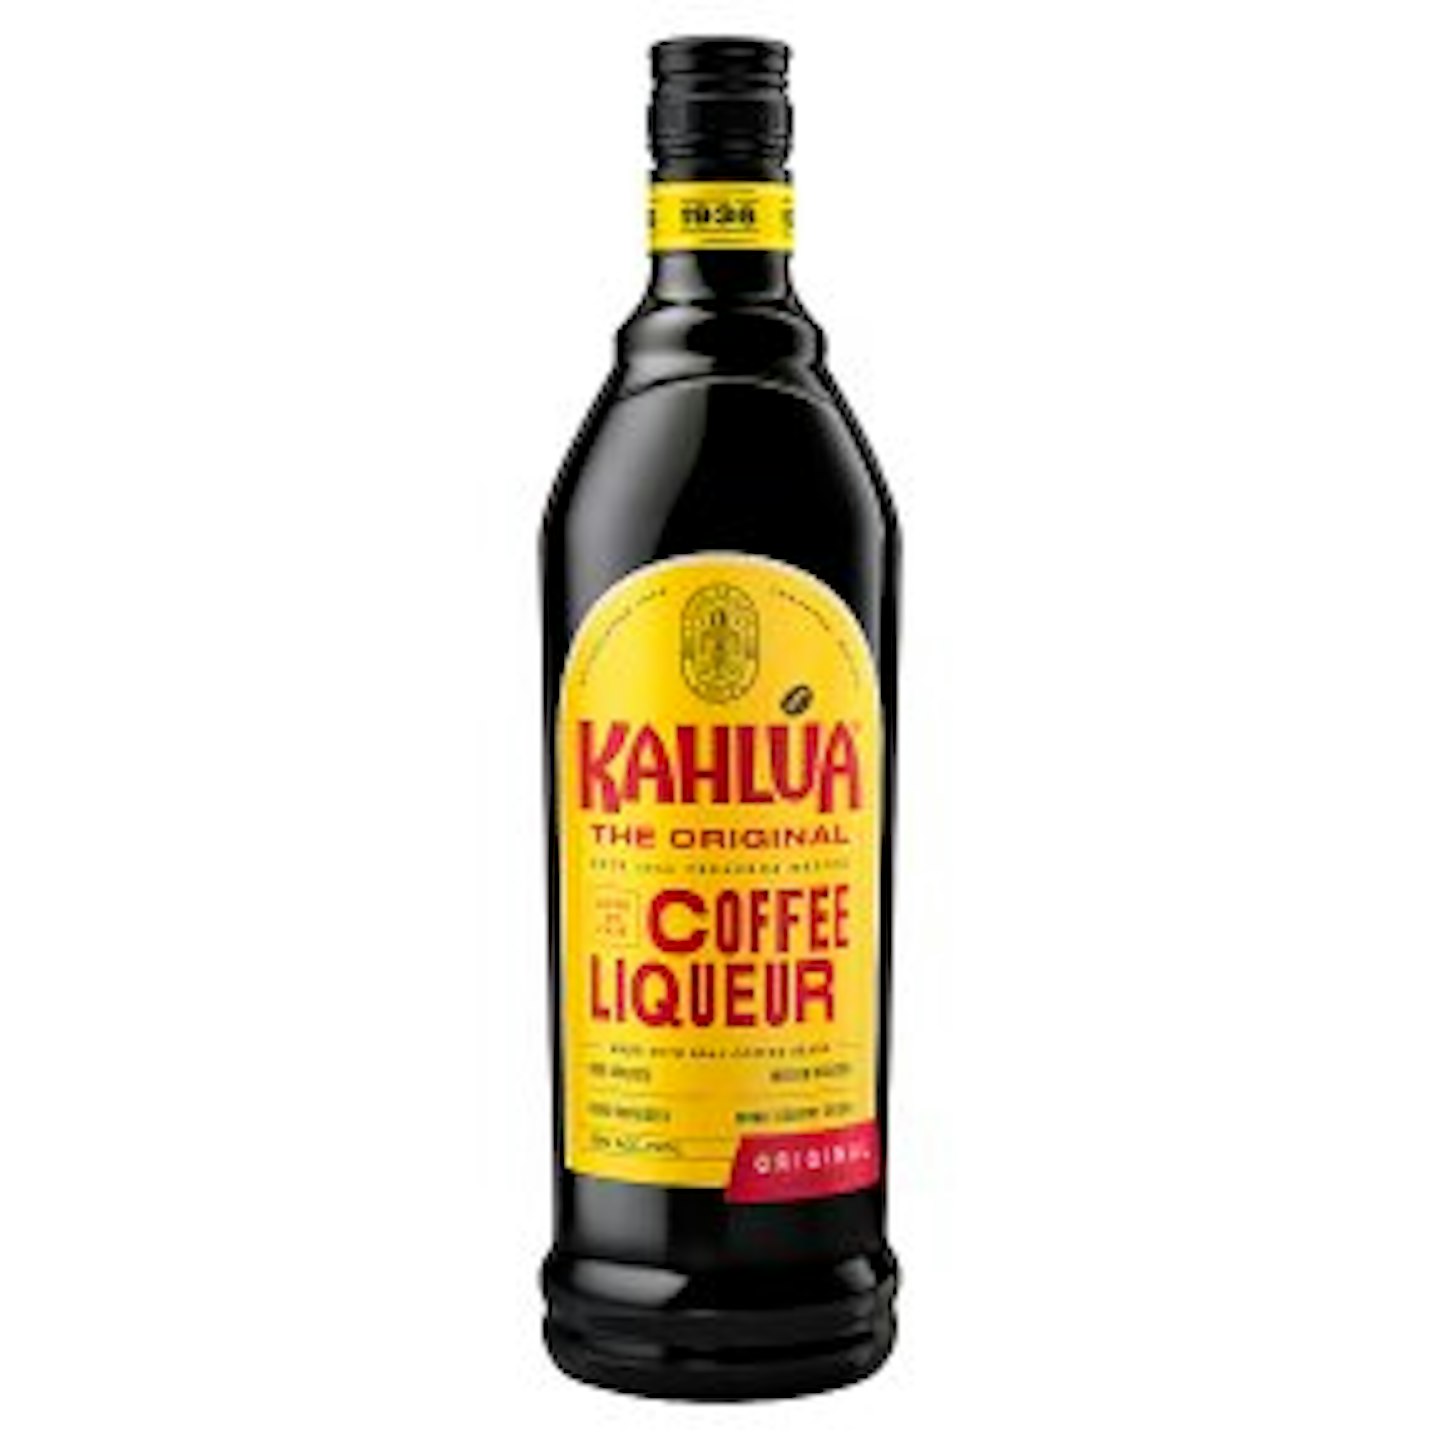 Kahlu00faa Coffee Liqueur